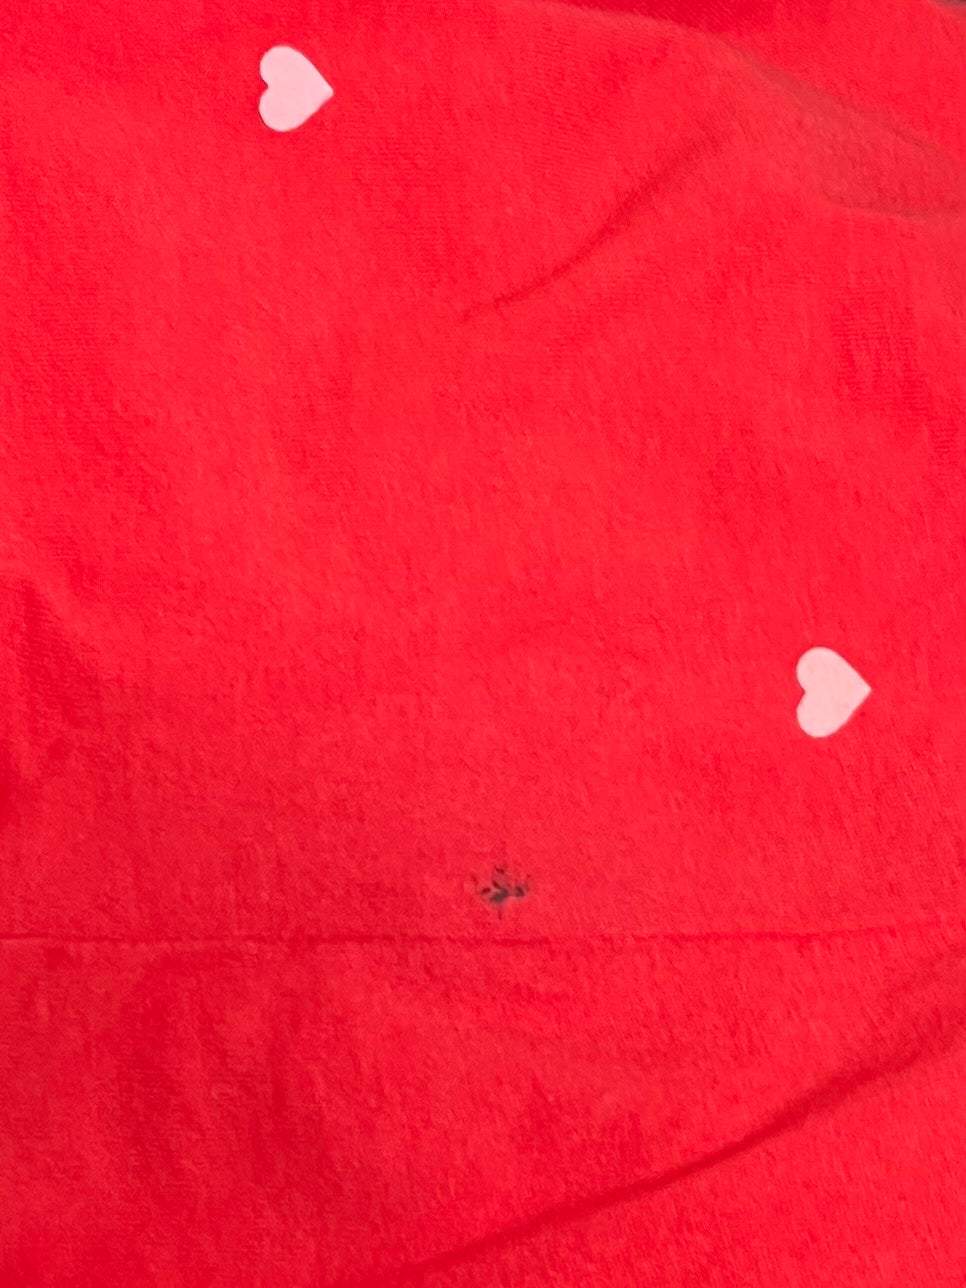 Style & Co. Women's Petite Open Heart Cotton T-Shirt Red Size PXXL